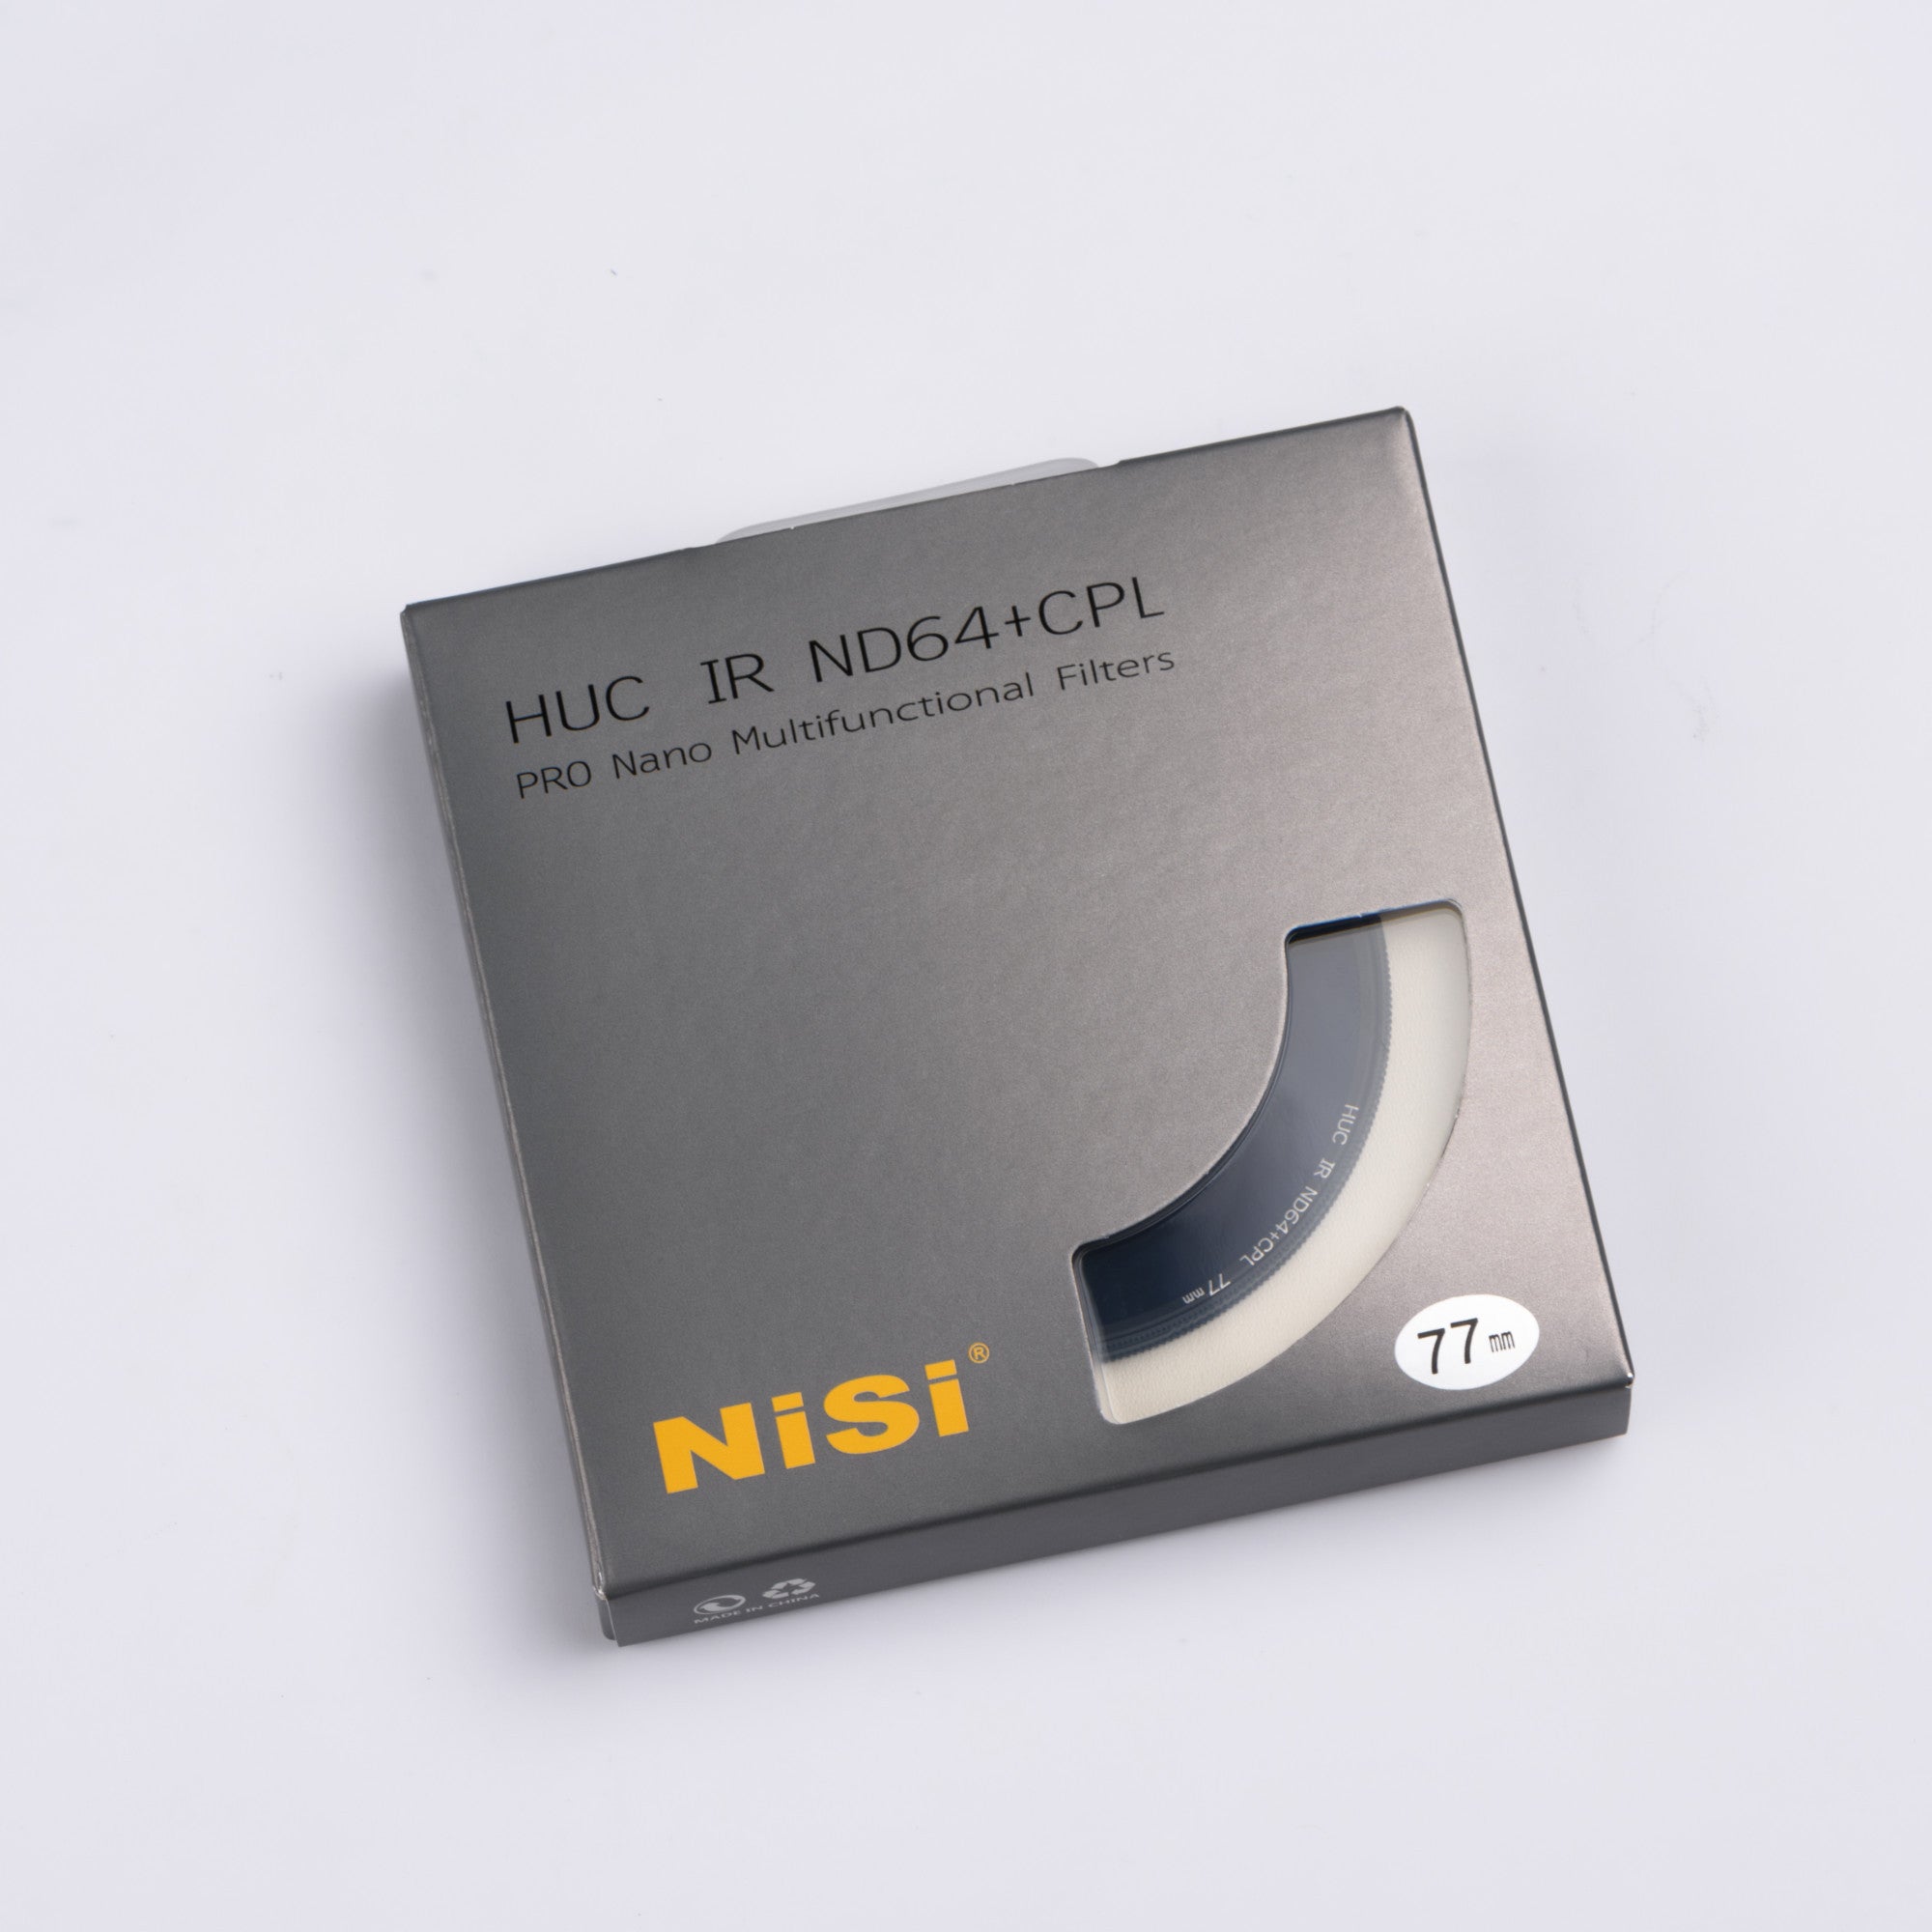 NiSi HUC PRO Nano IR ND64 + CPL 77mm Multifunctional Filter